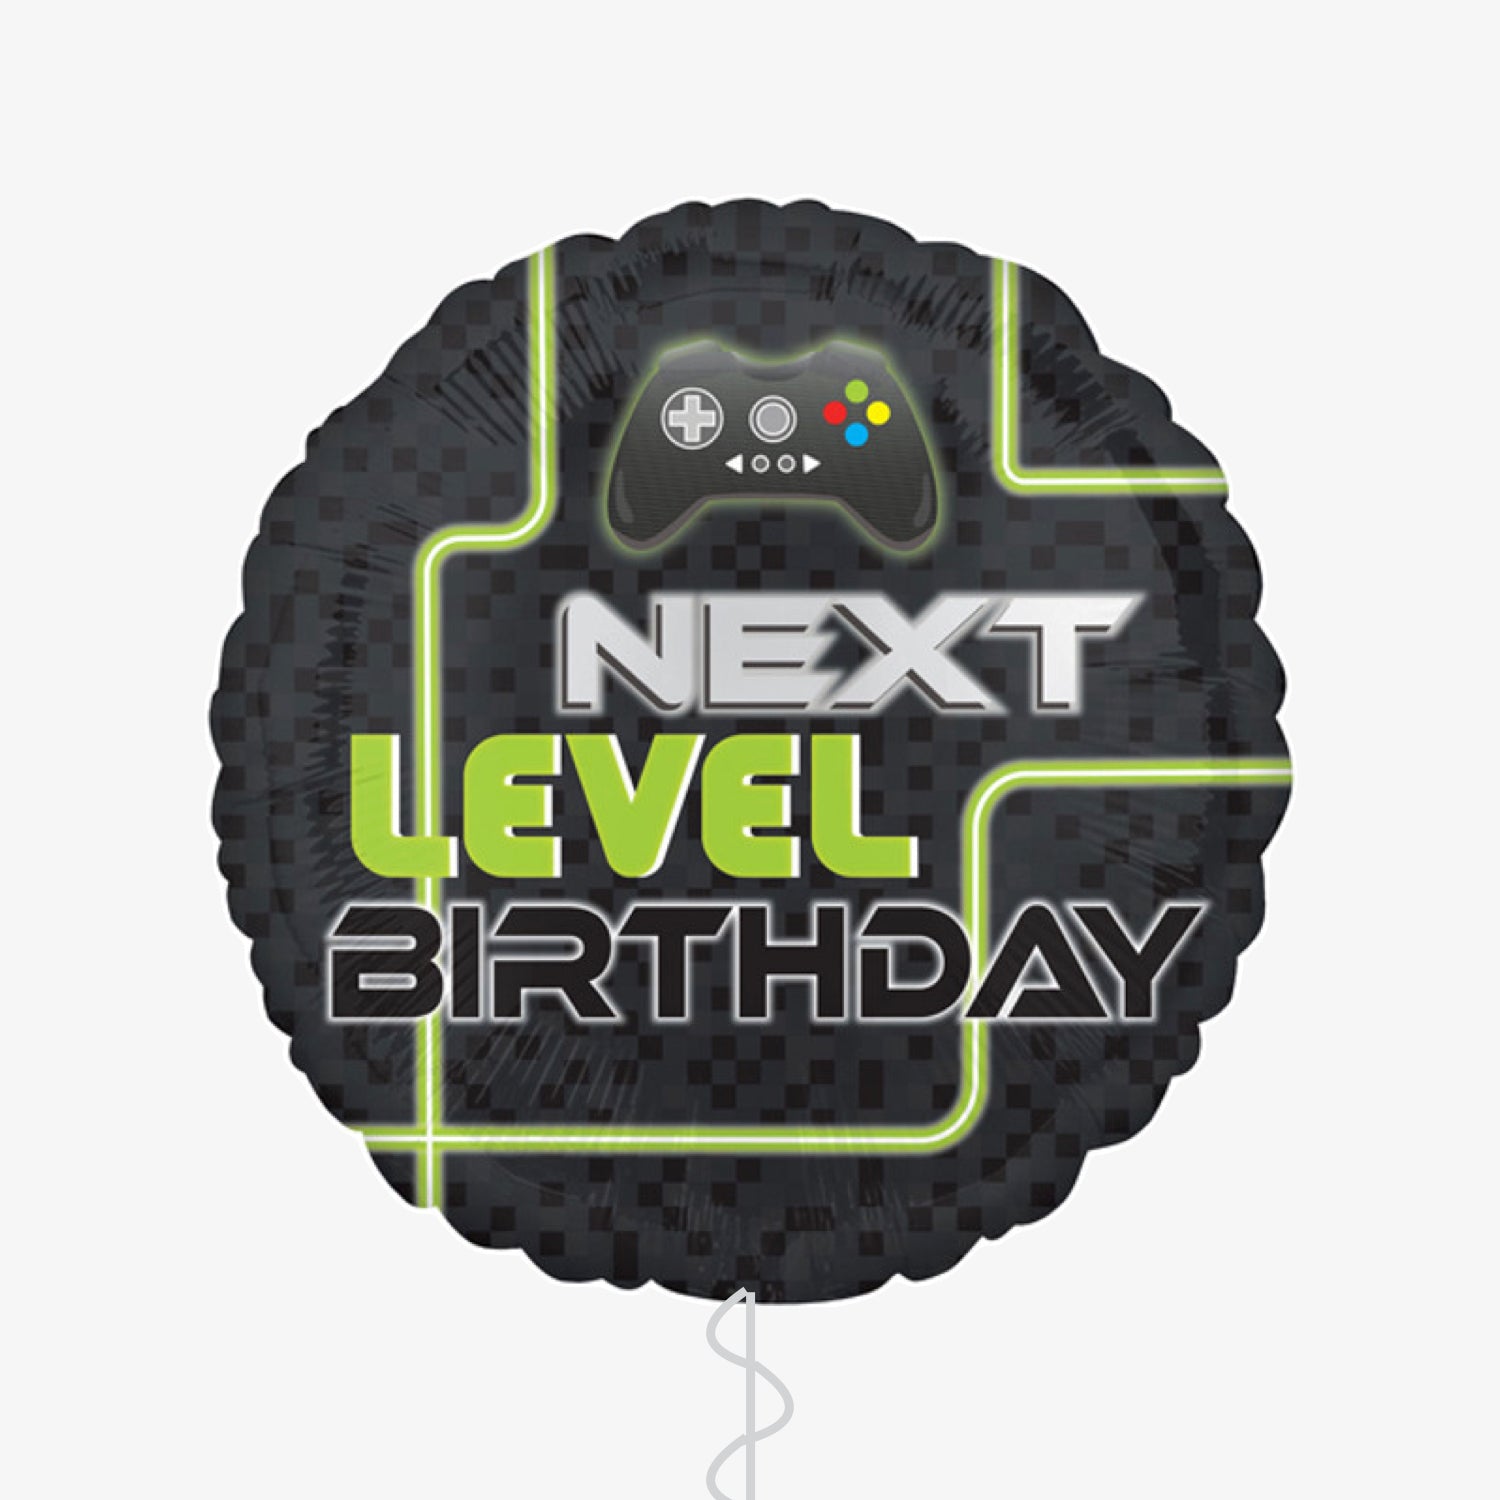 Next level Birthday Balloon